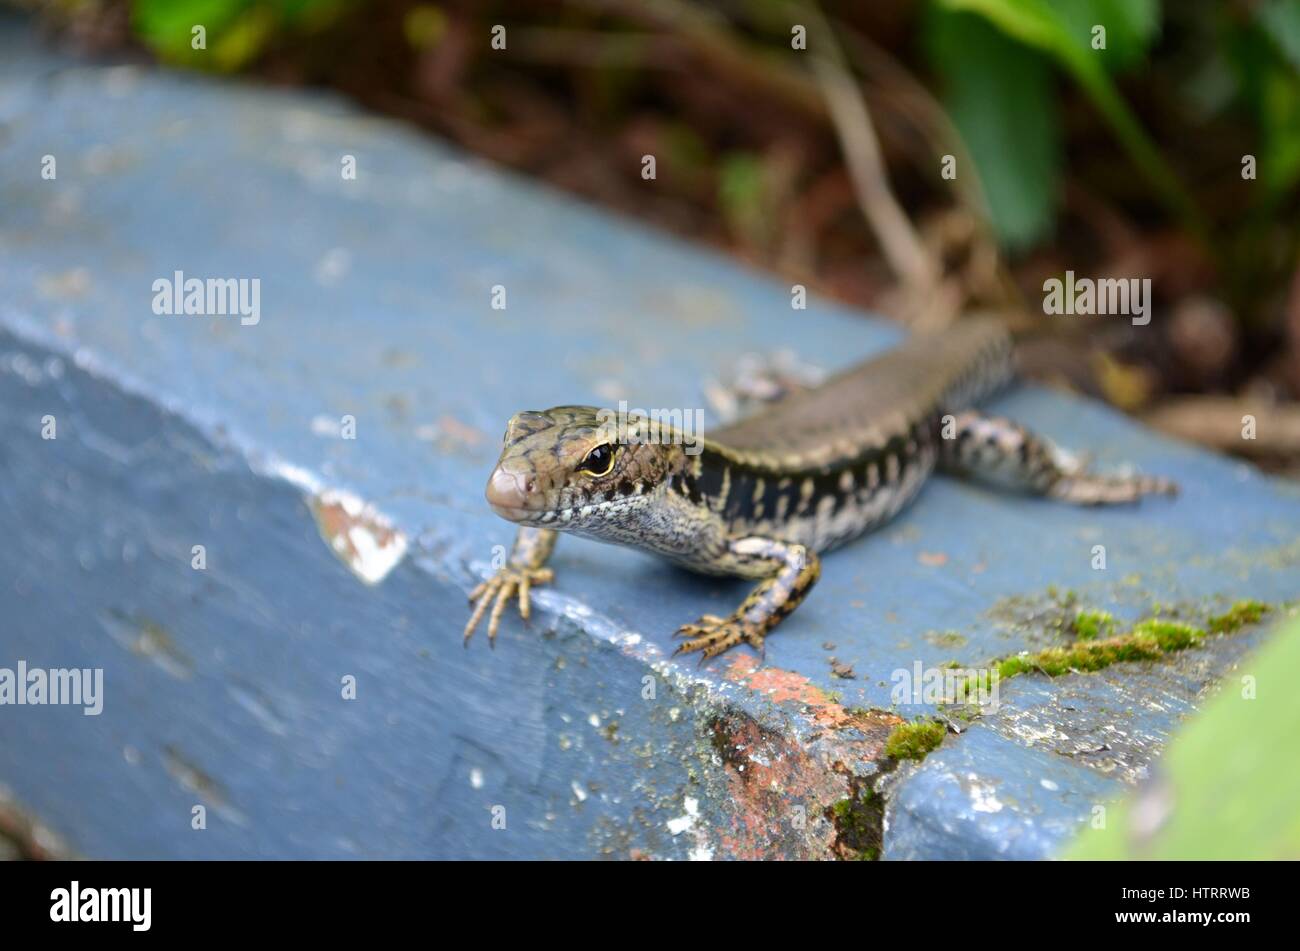 Jardin commun skink lizard zoom in close up Banque D'Images